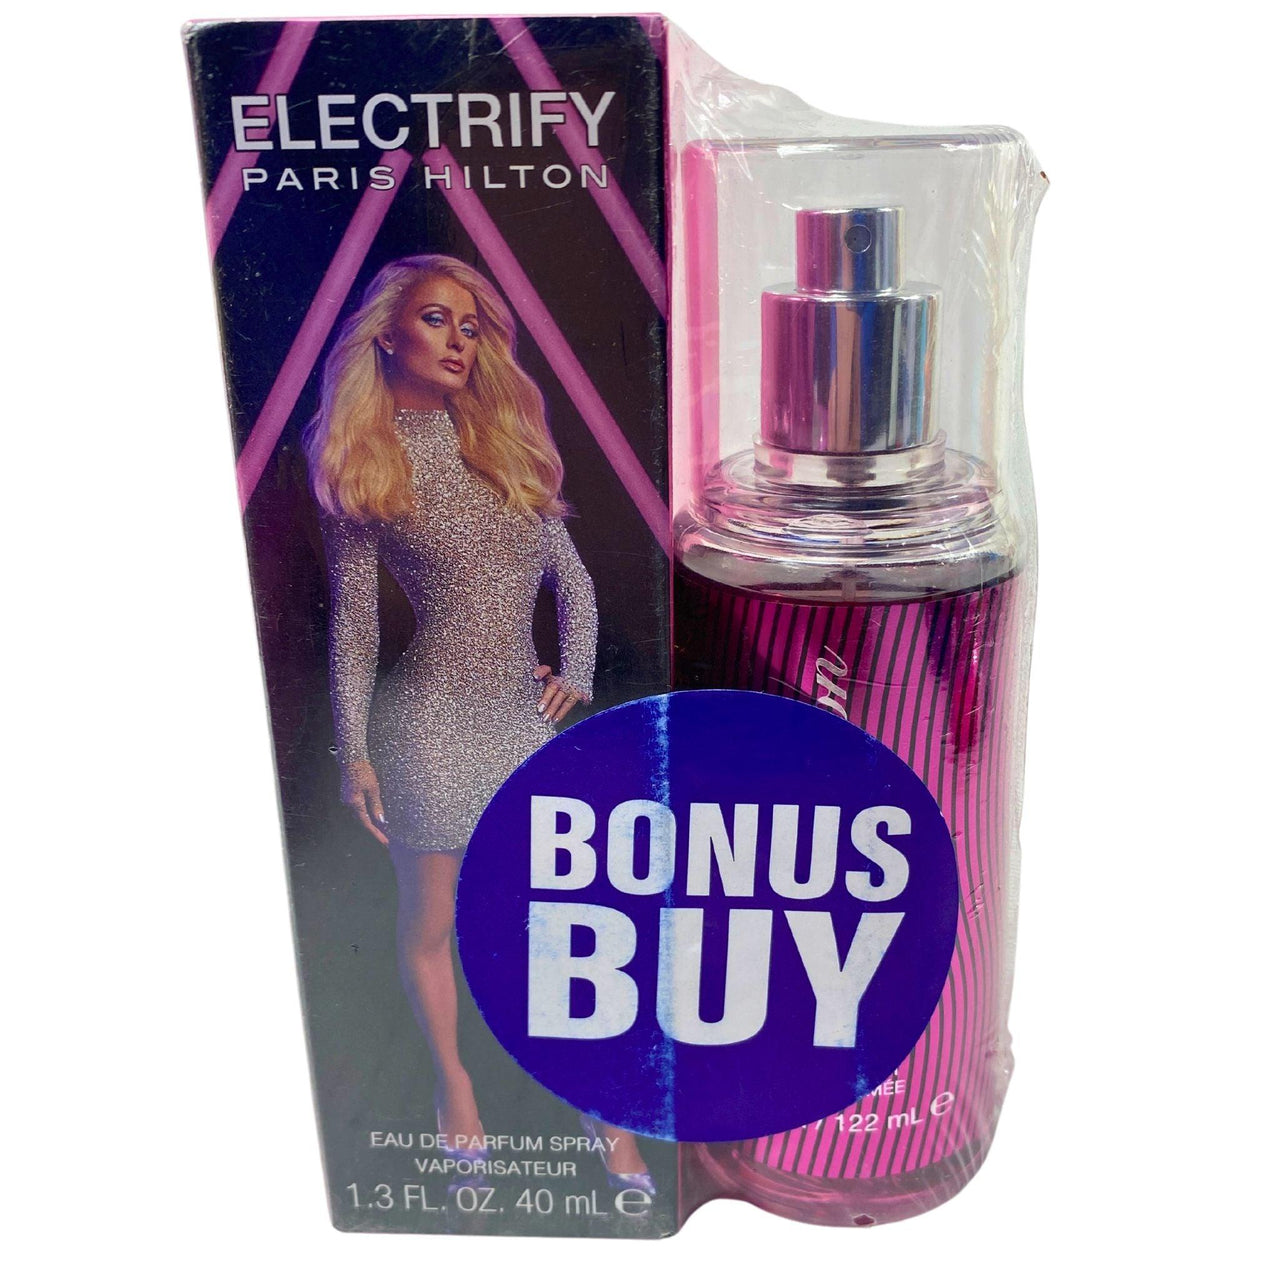 Electrify by Paris Hilton for Women Duo 1.3fl oz 40ml /1.2oz 122ml (32 Pcs Lot) - Discount Wholesalers Inc